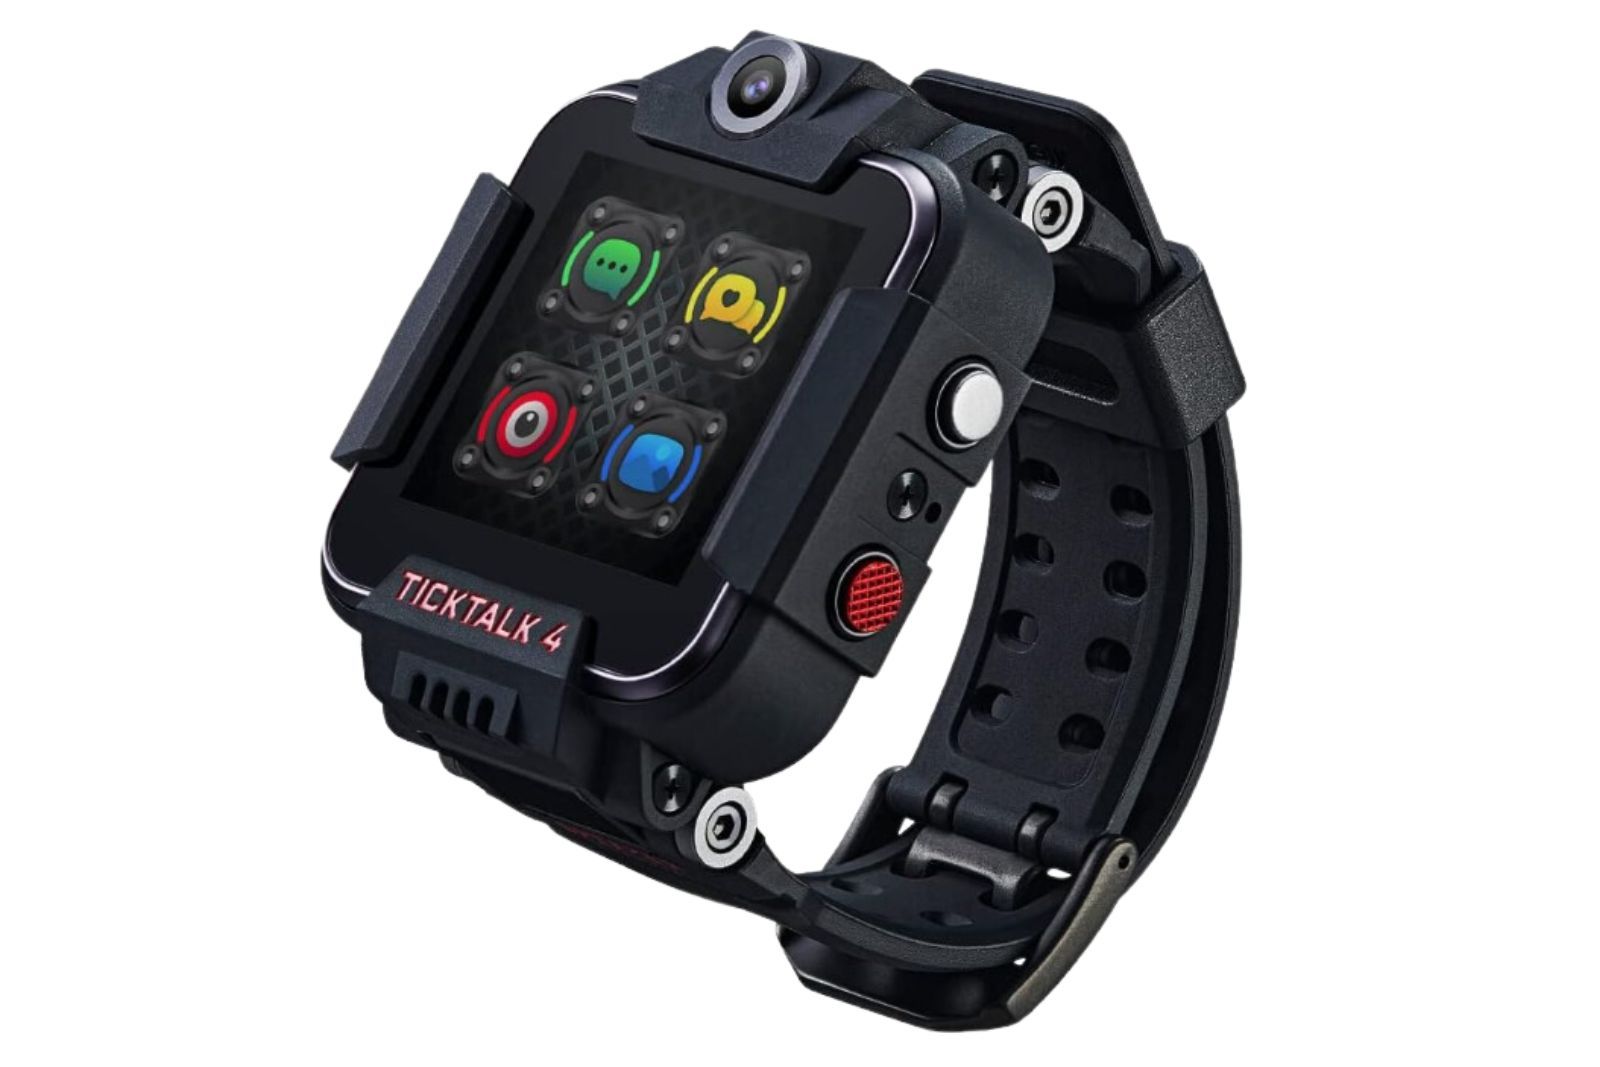 TickTalk 4 for best GPS smartwatches